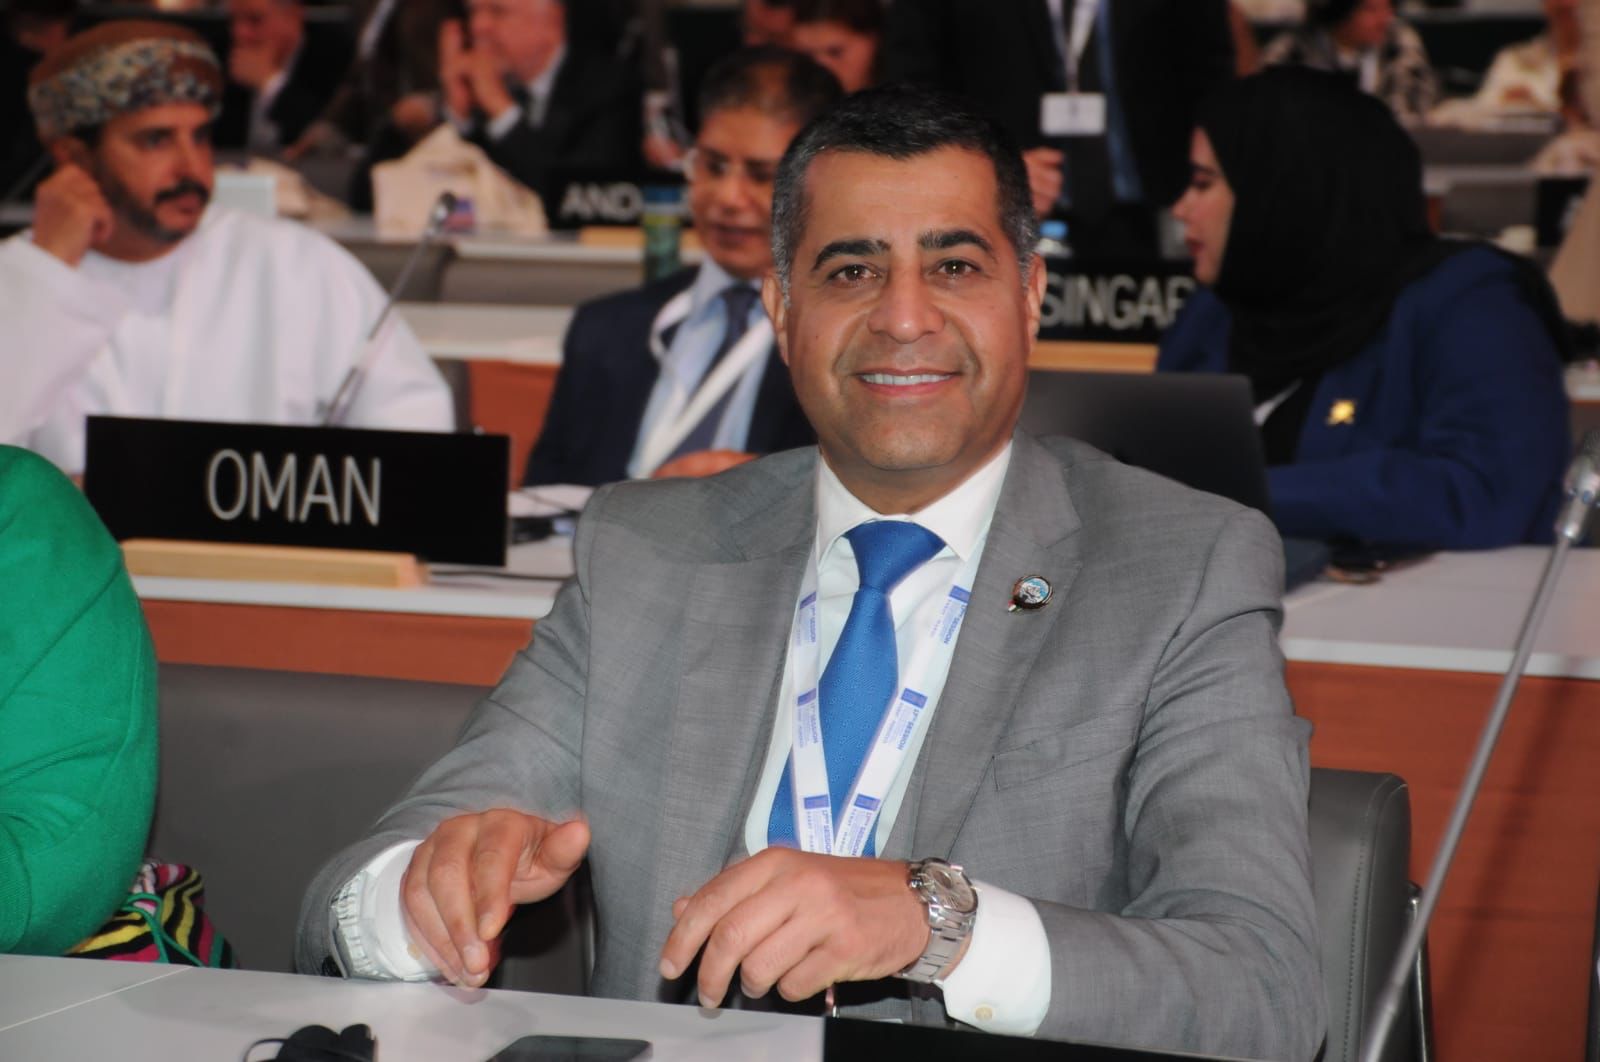 Kuwait's permanent UNESCO representative, Ambassador Adam Al-Mulla